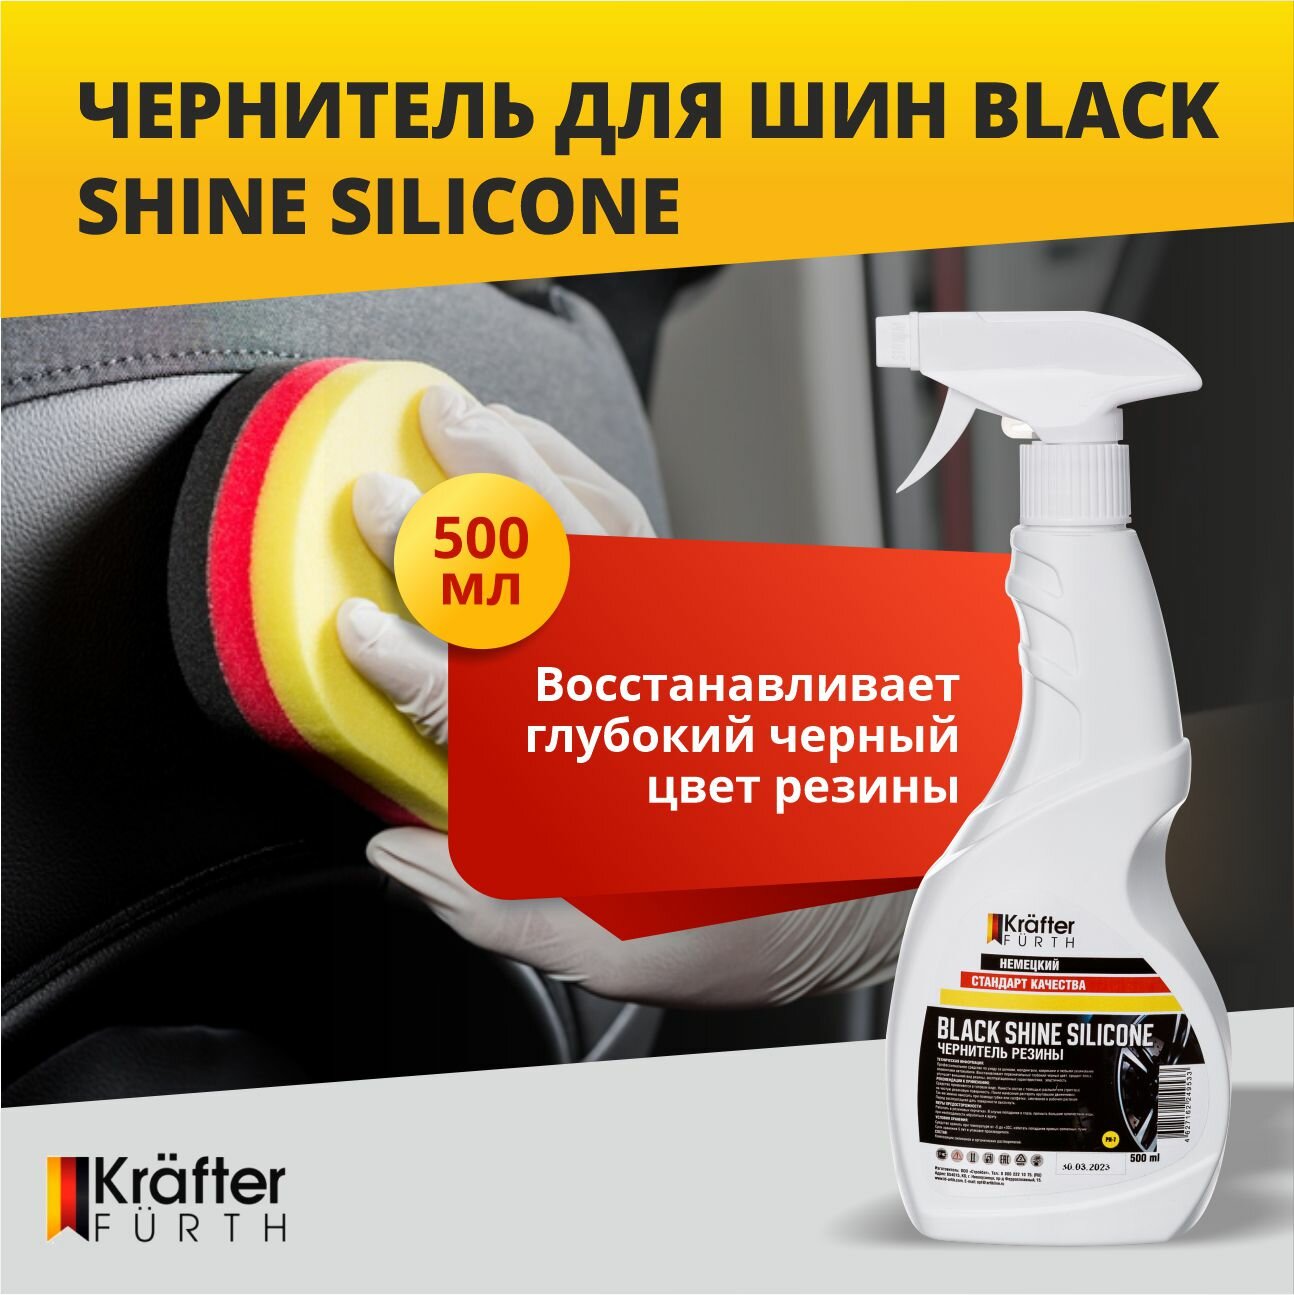 Чернитель для резины шин Black Shine Silicone  Krafter Furth 500 мл спрей.